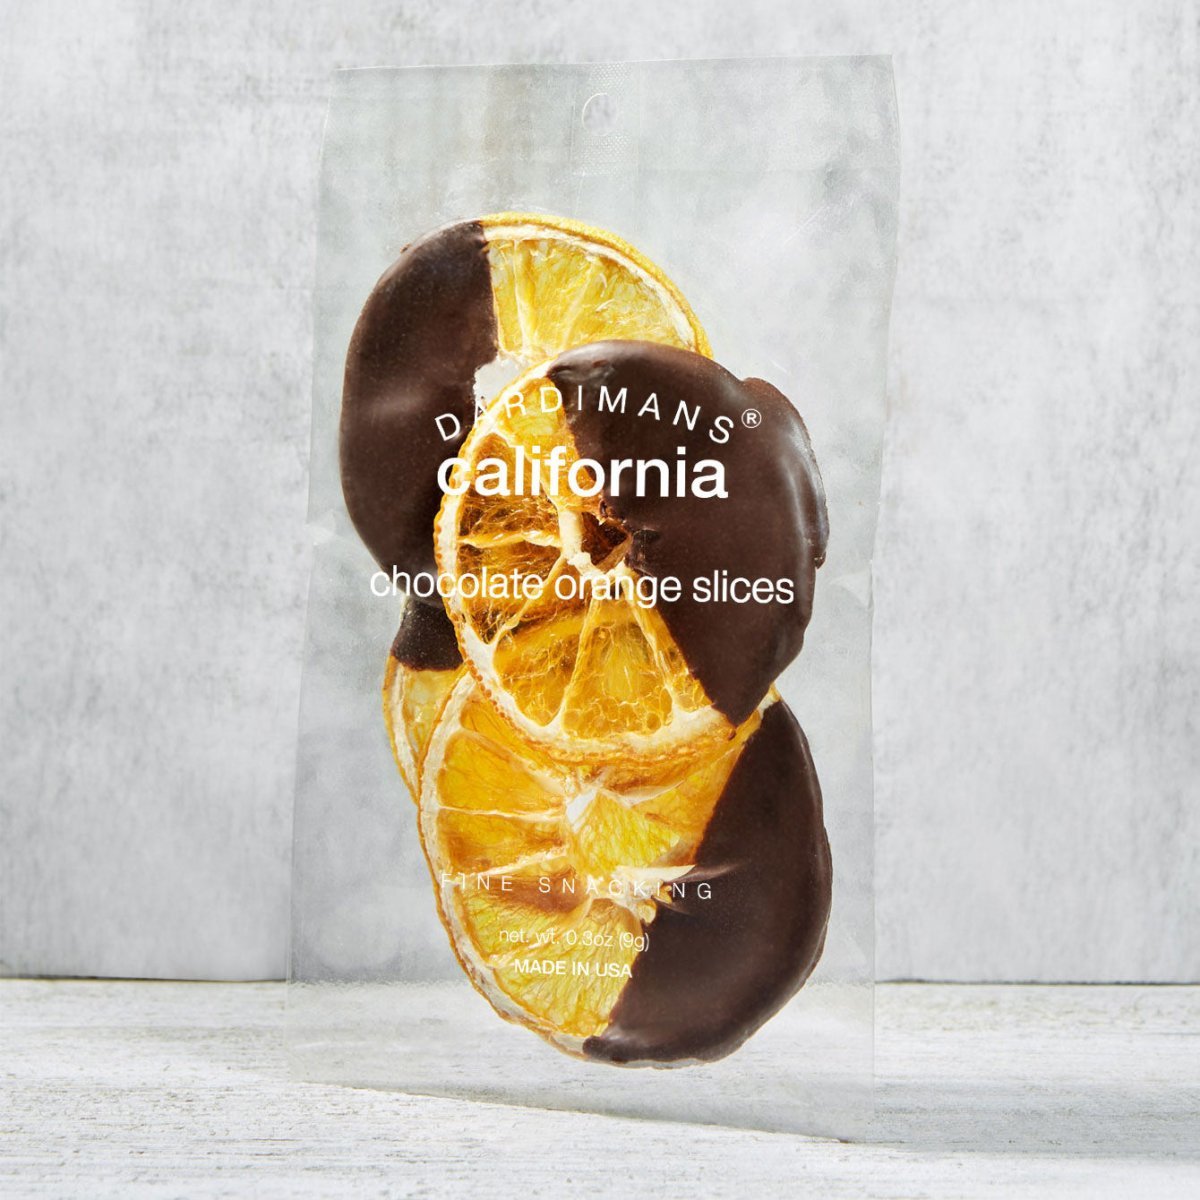 dardimans california dark chocolate orange slices.